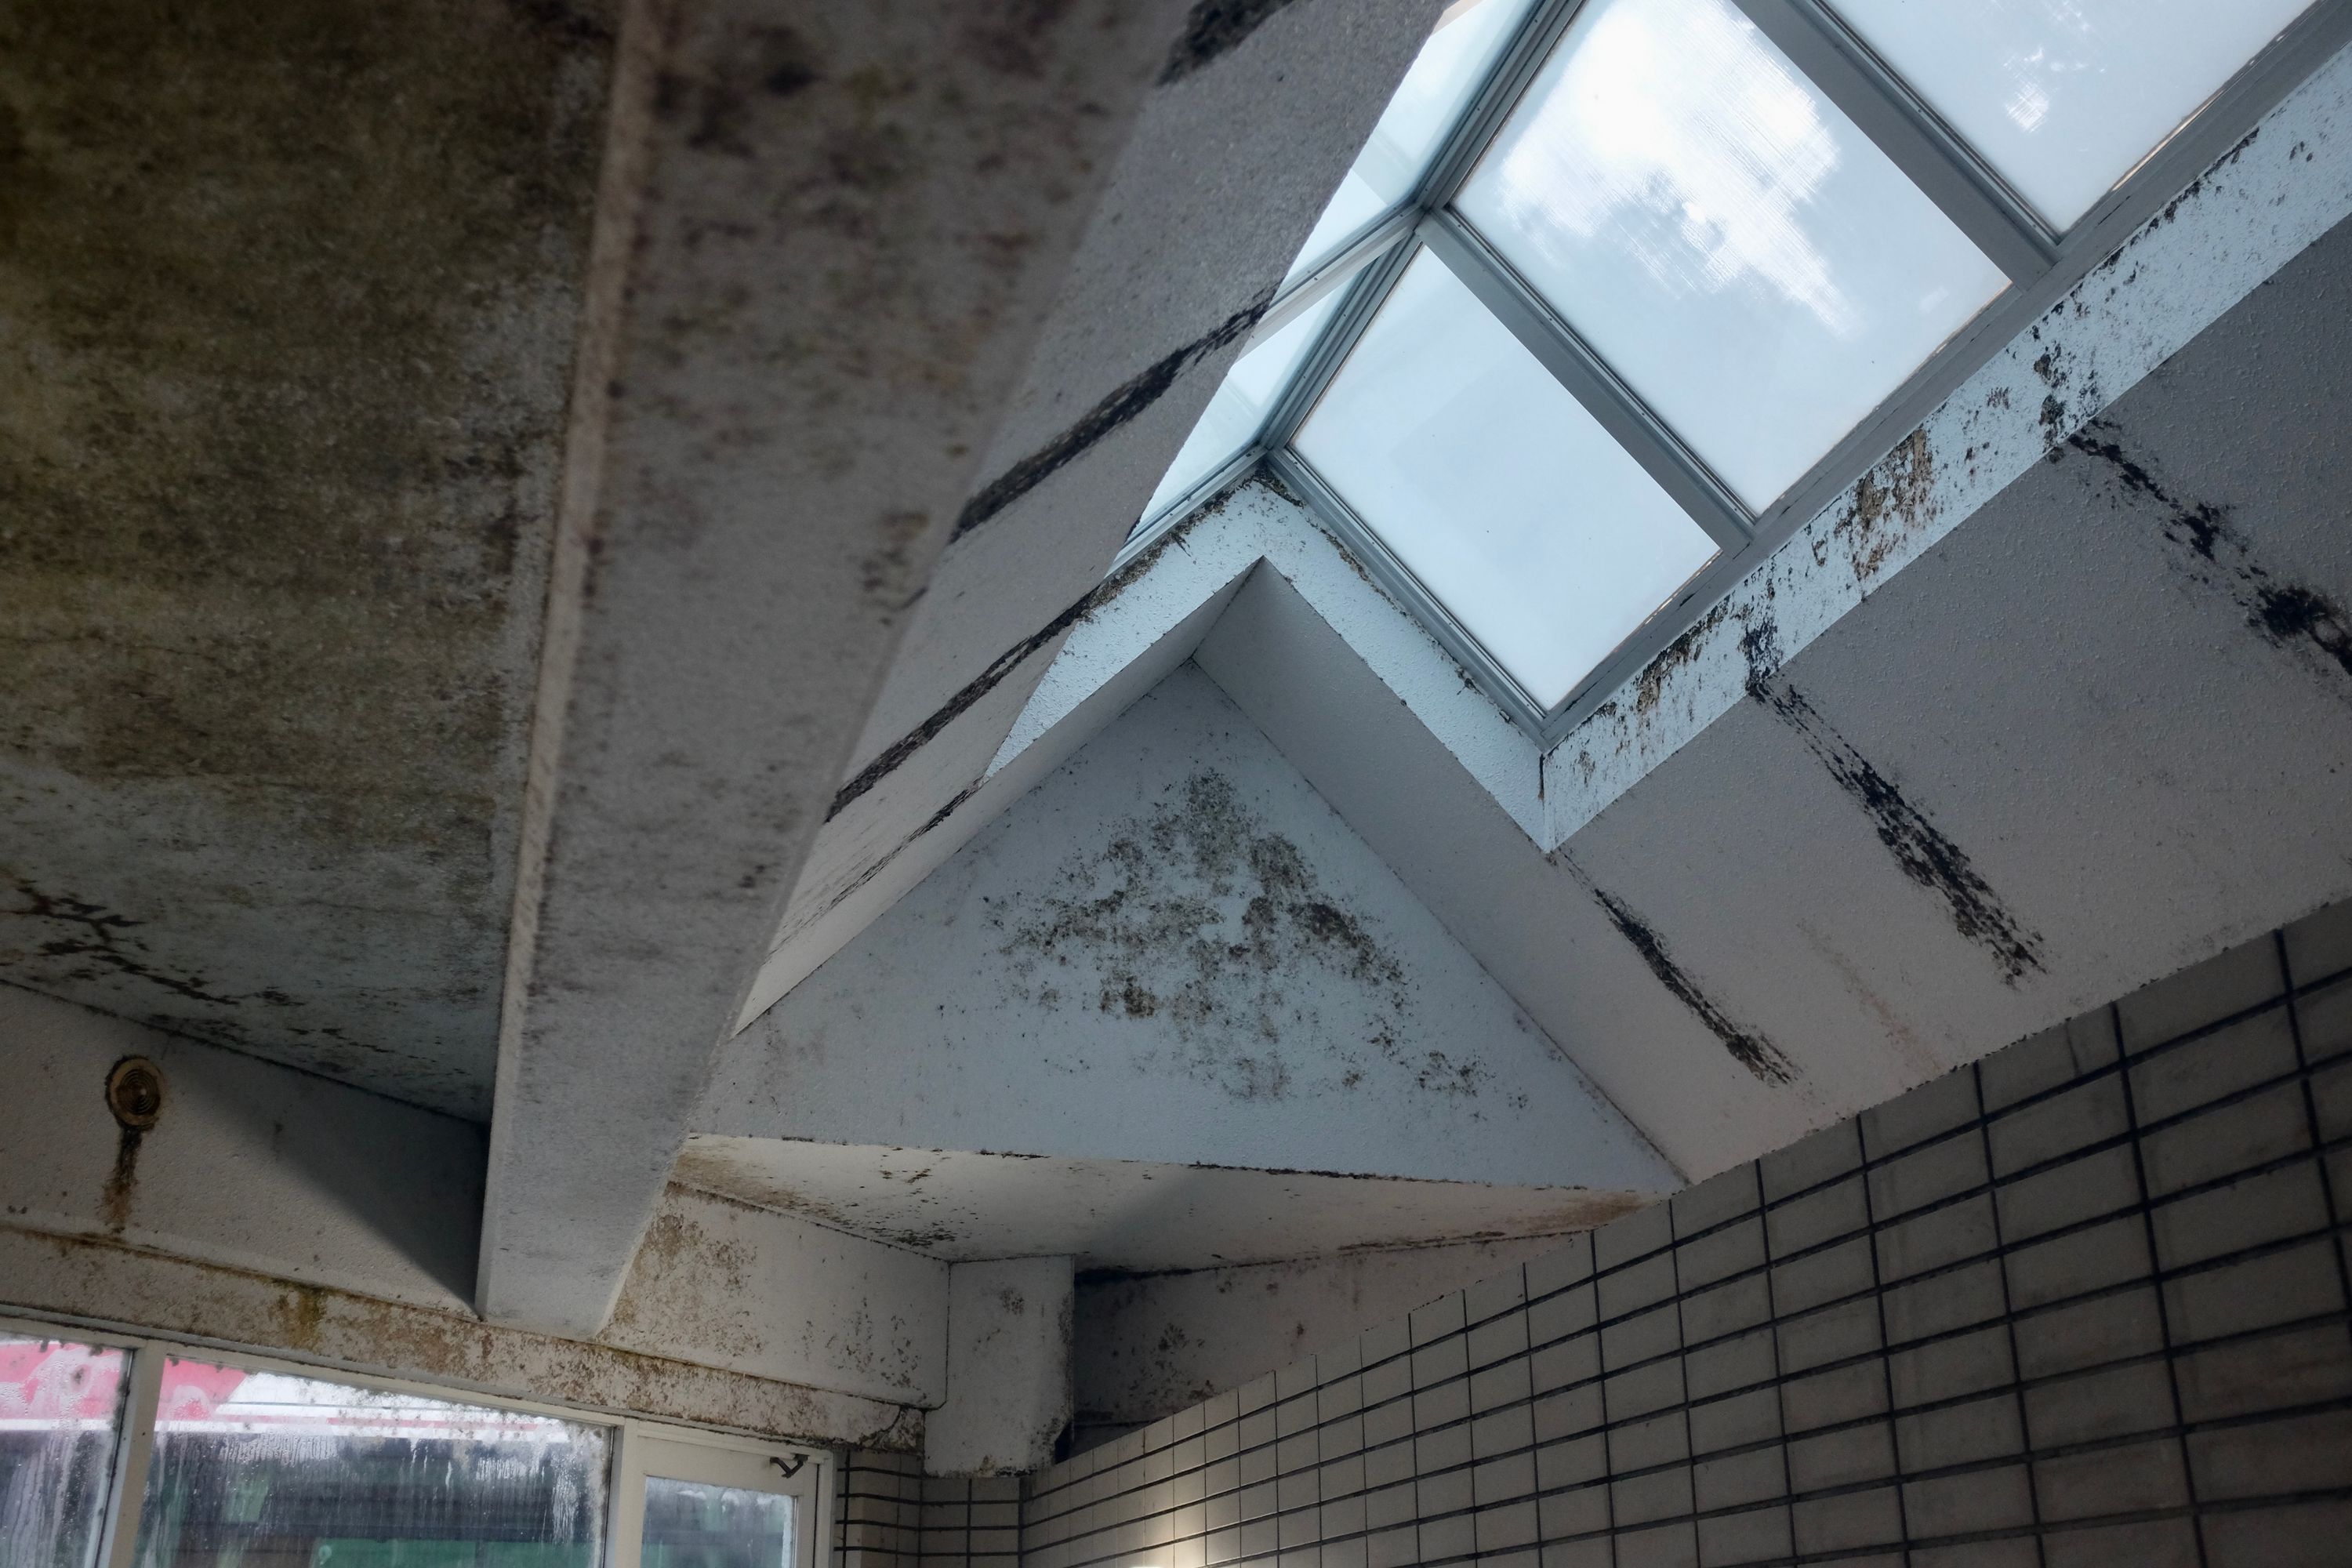 The very moldy ceiling of an angular, 1980s-looking bathhouse.